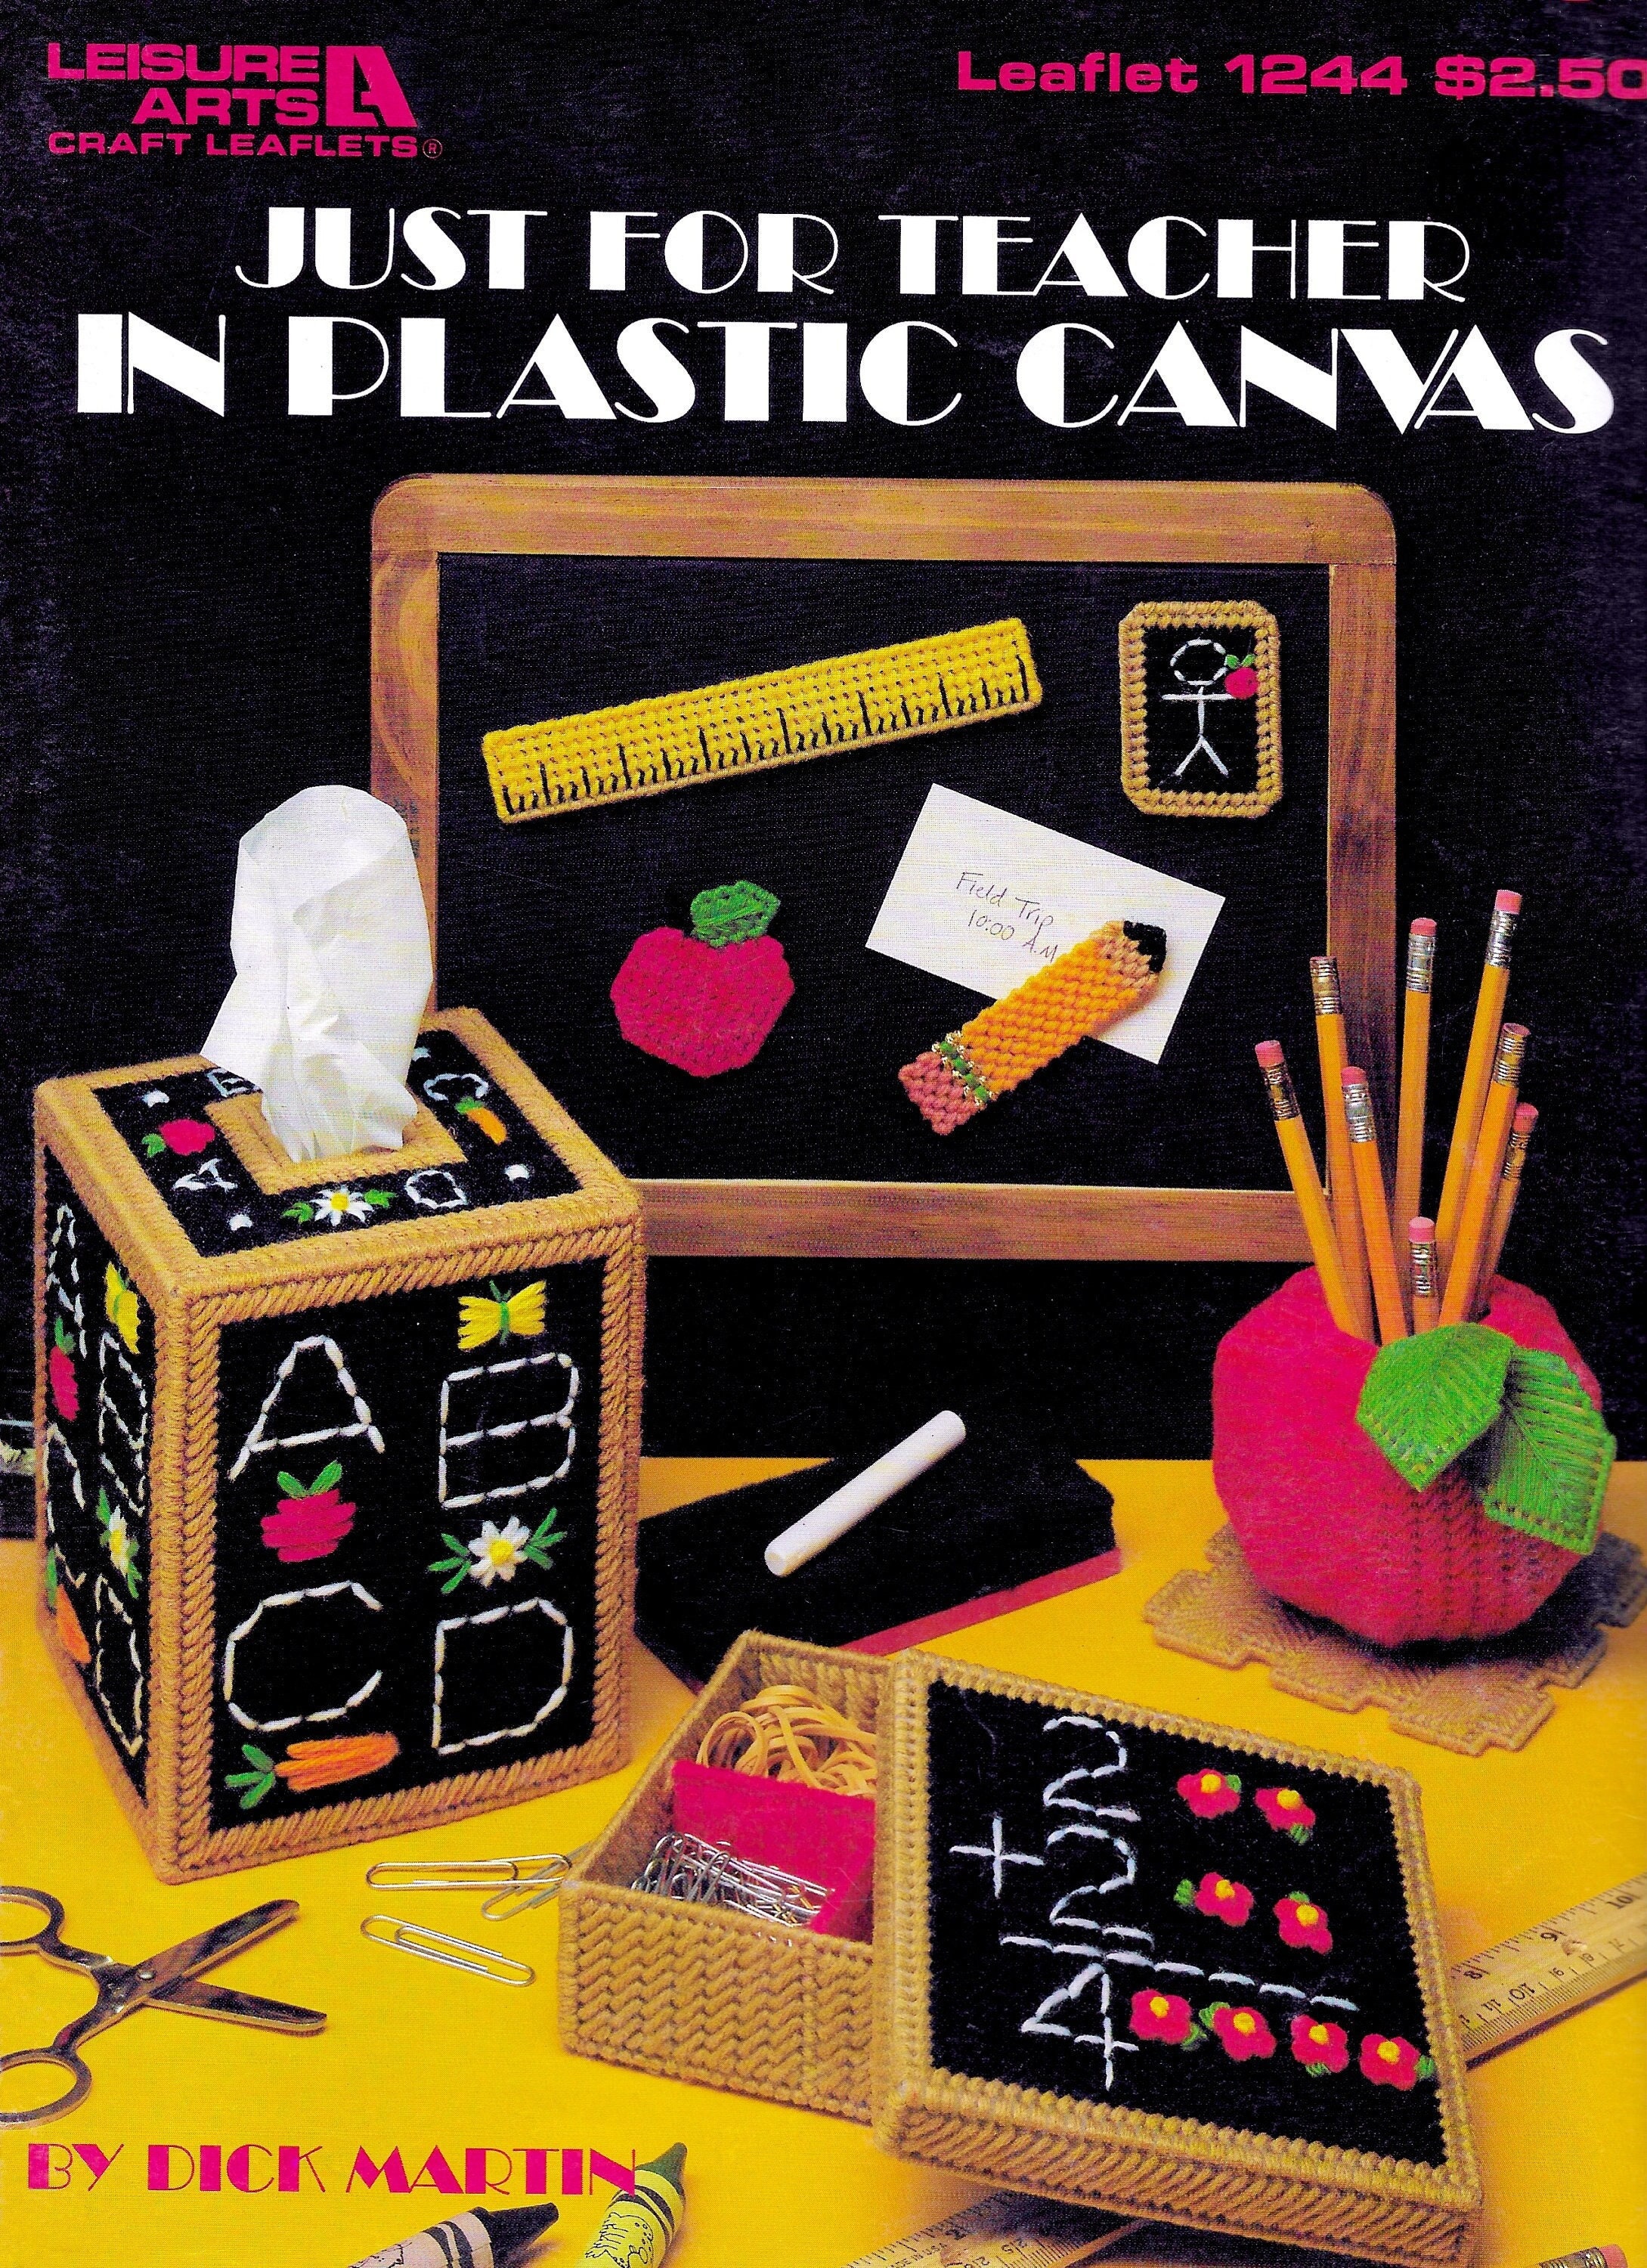 1980s Arts & Crafts Fall Foliage Ceramic Tissue Box Cover.